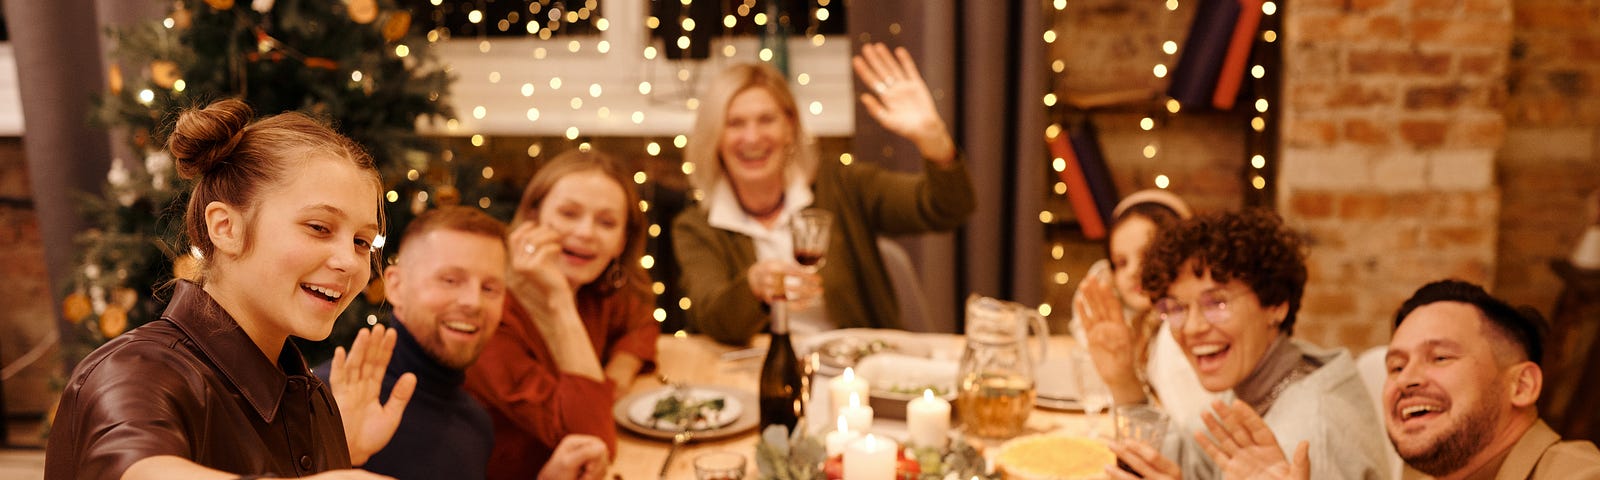 Family celebrating Christmas dinner while taking a selfie